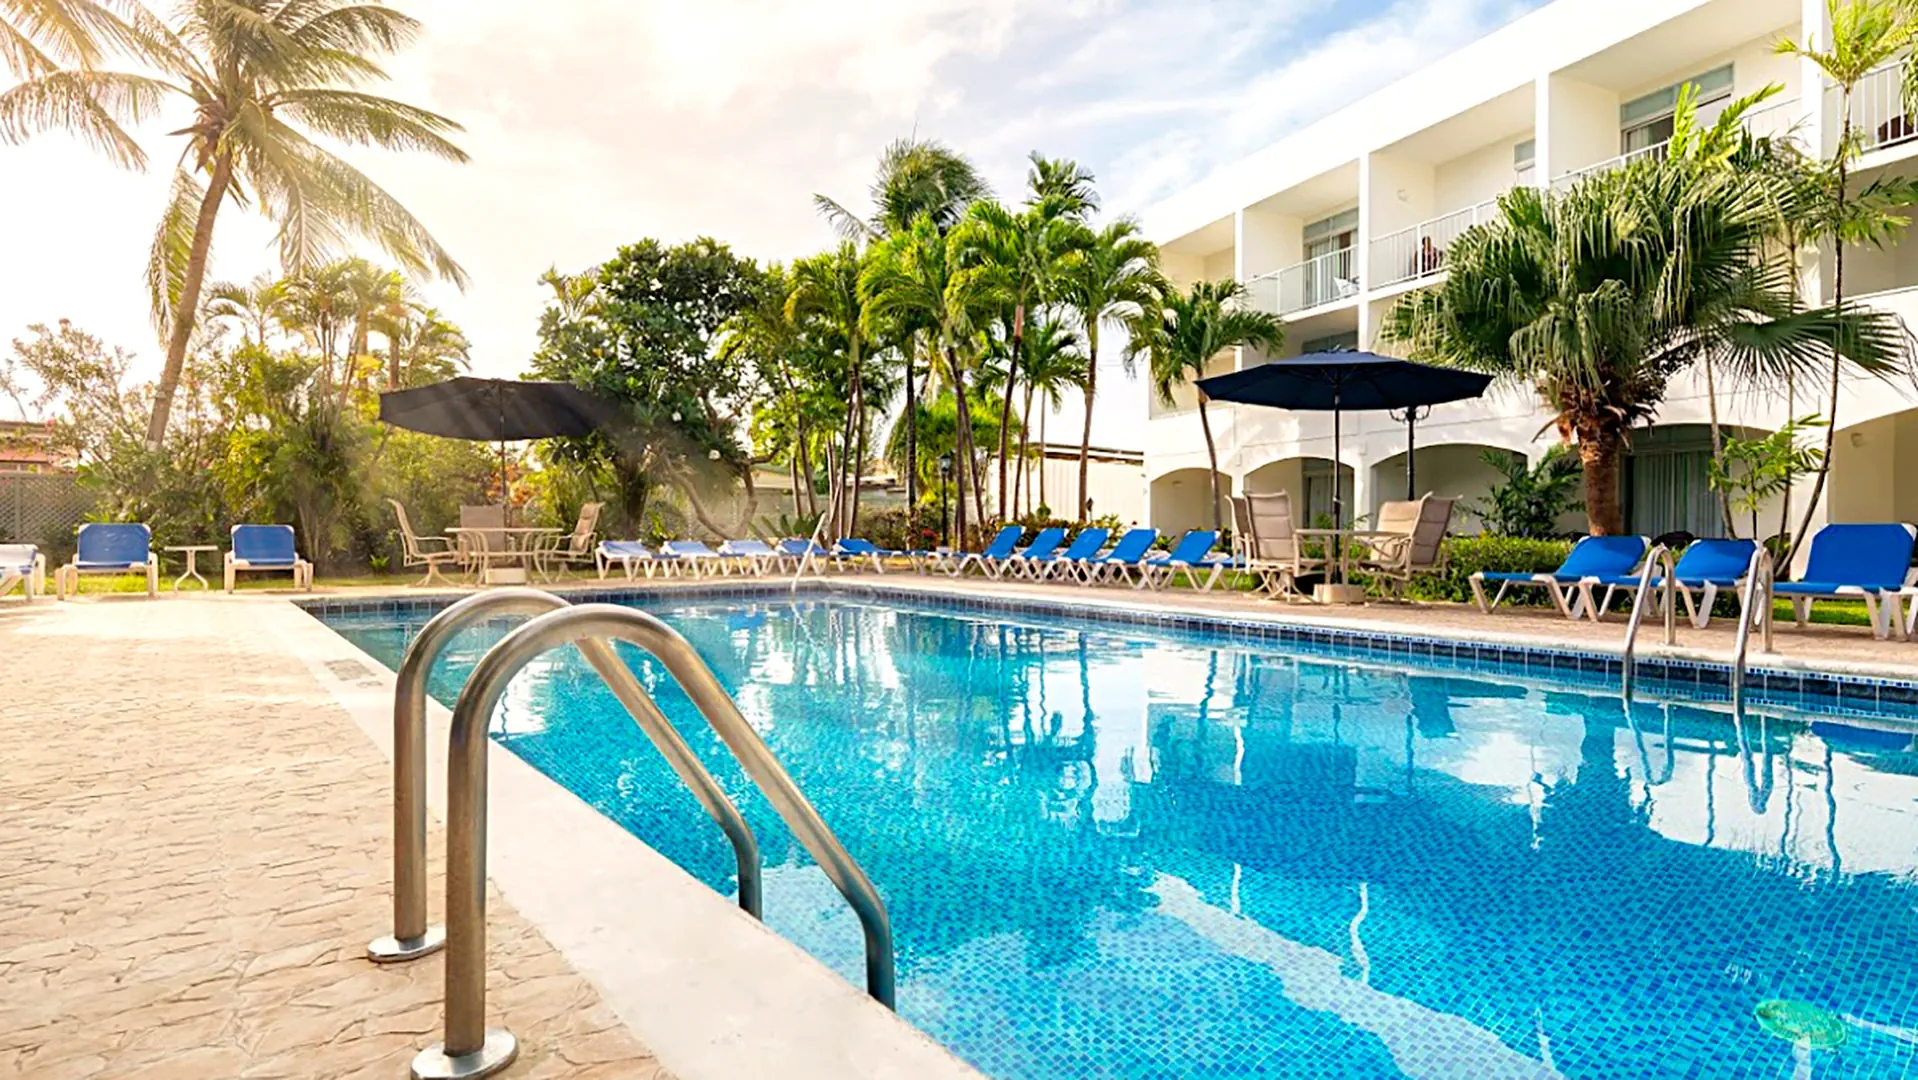 Karaiby Barbados Oistins Time Out Hotel